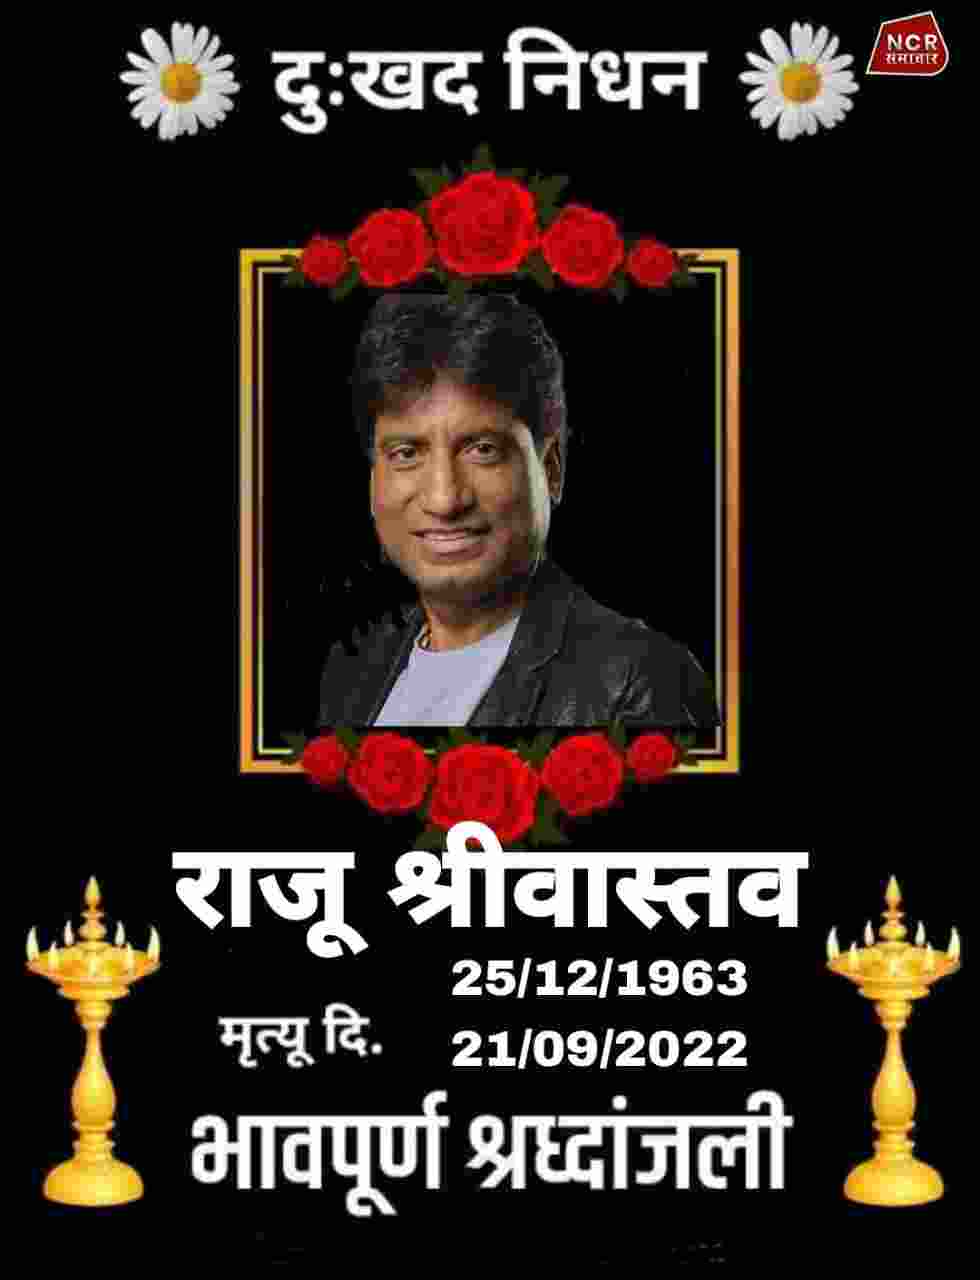 raju srivastava passes away: कॉमेडियन राजू श्रीवास्तव का दिल